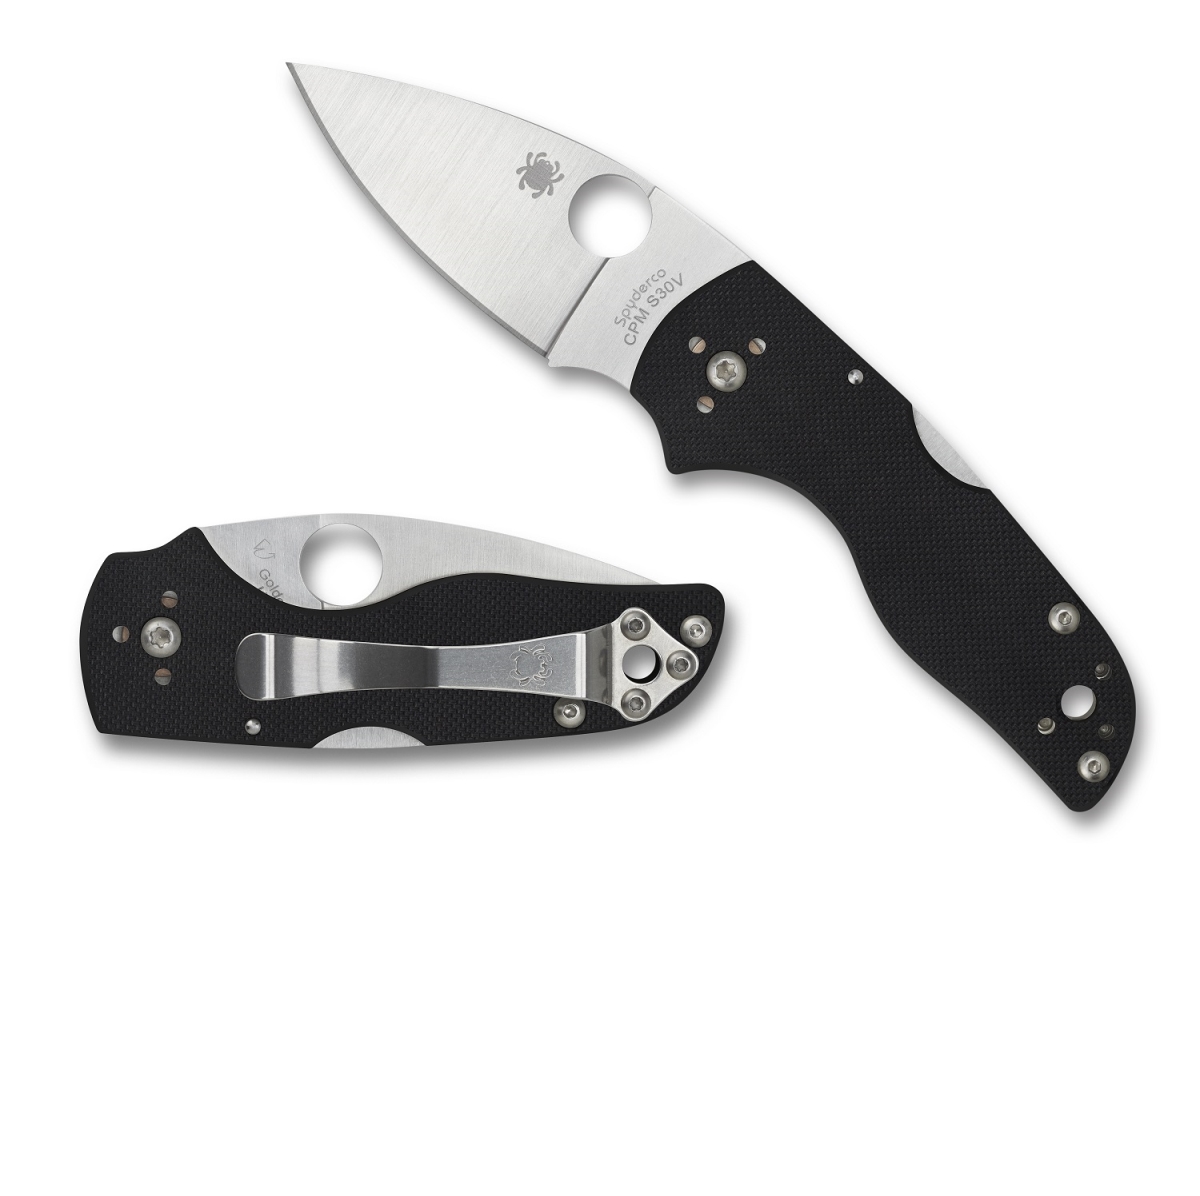 Spyderco 4016004 2.47 in. Lil Native Folder Knife with Plain G-10 Handle, Black